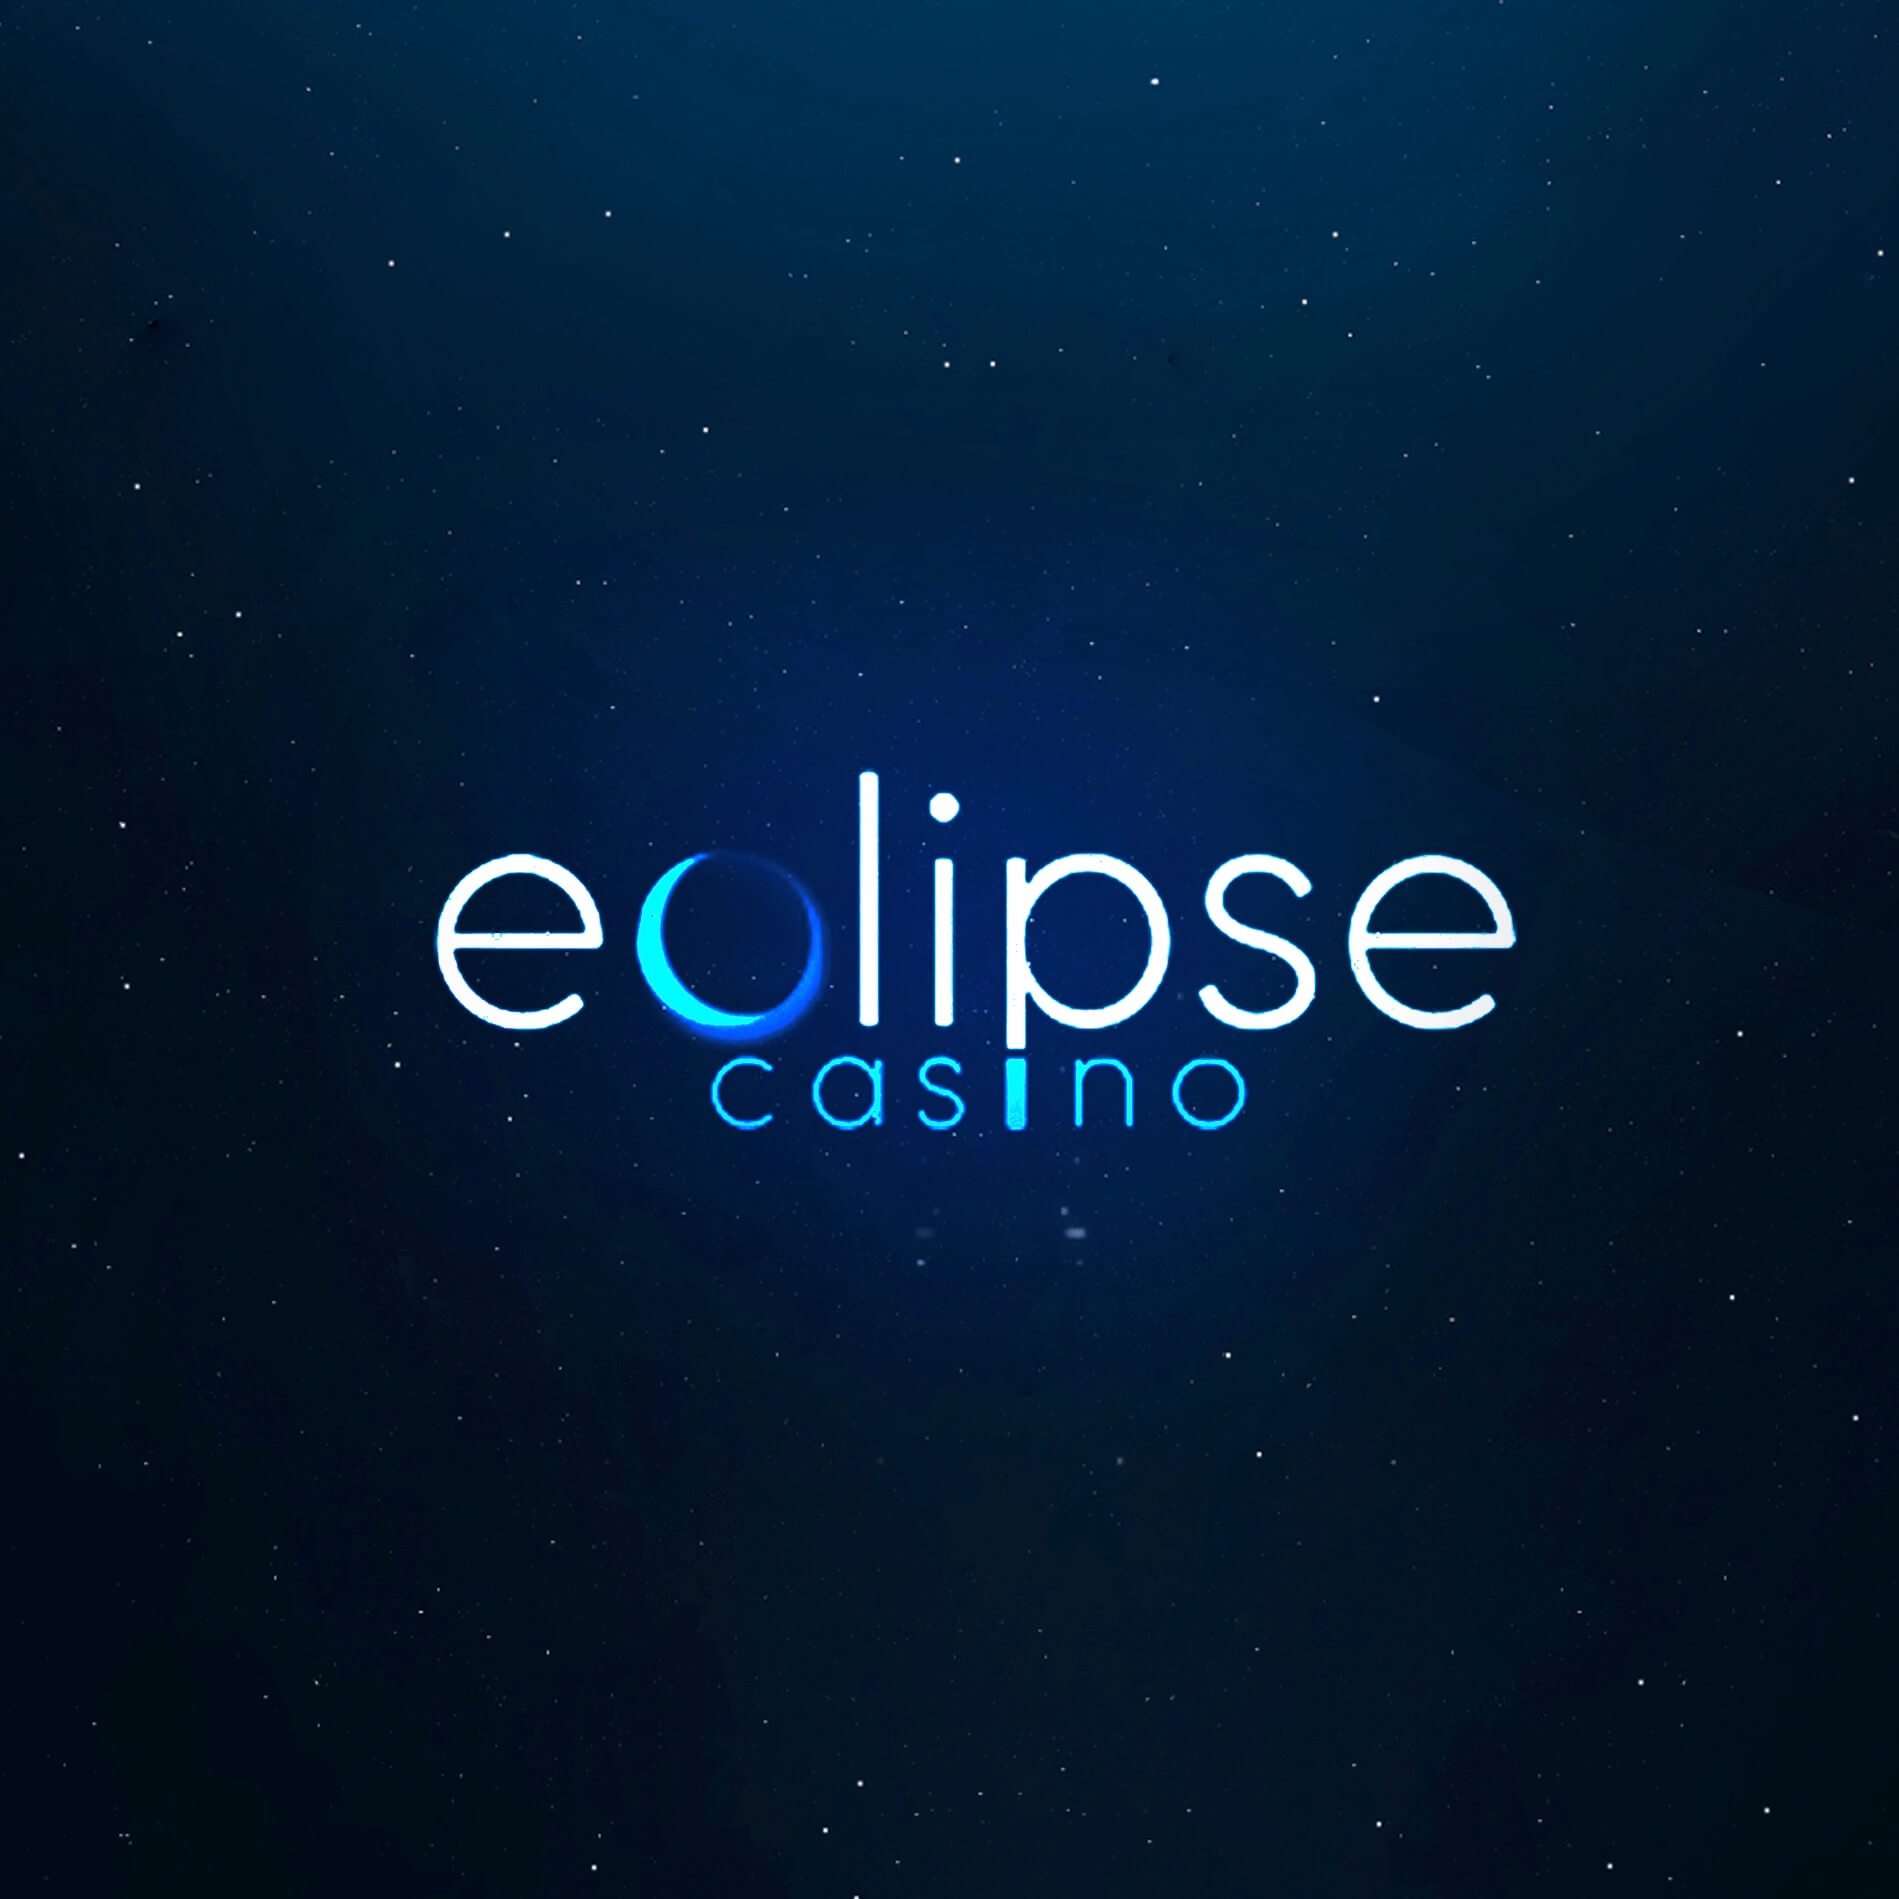 Eclipse Casino